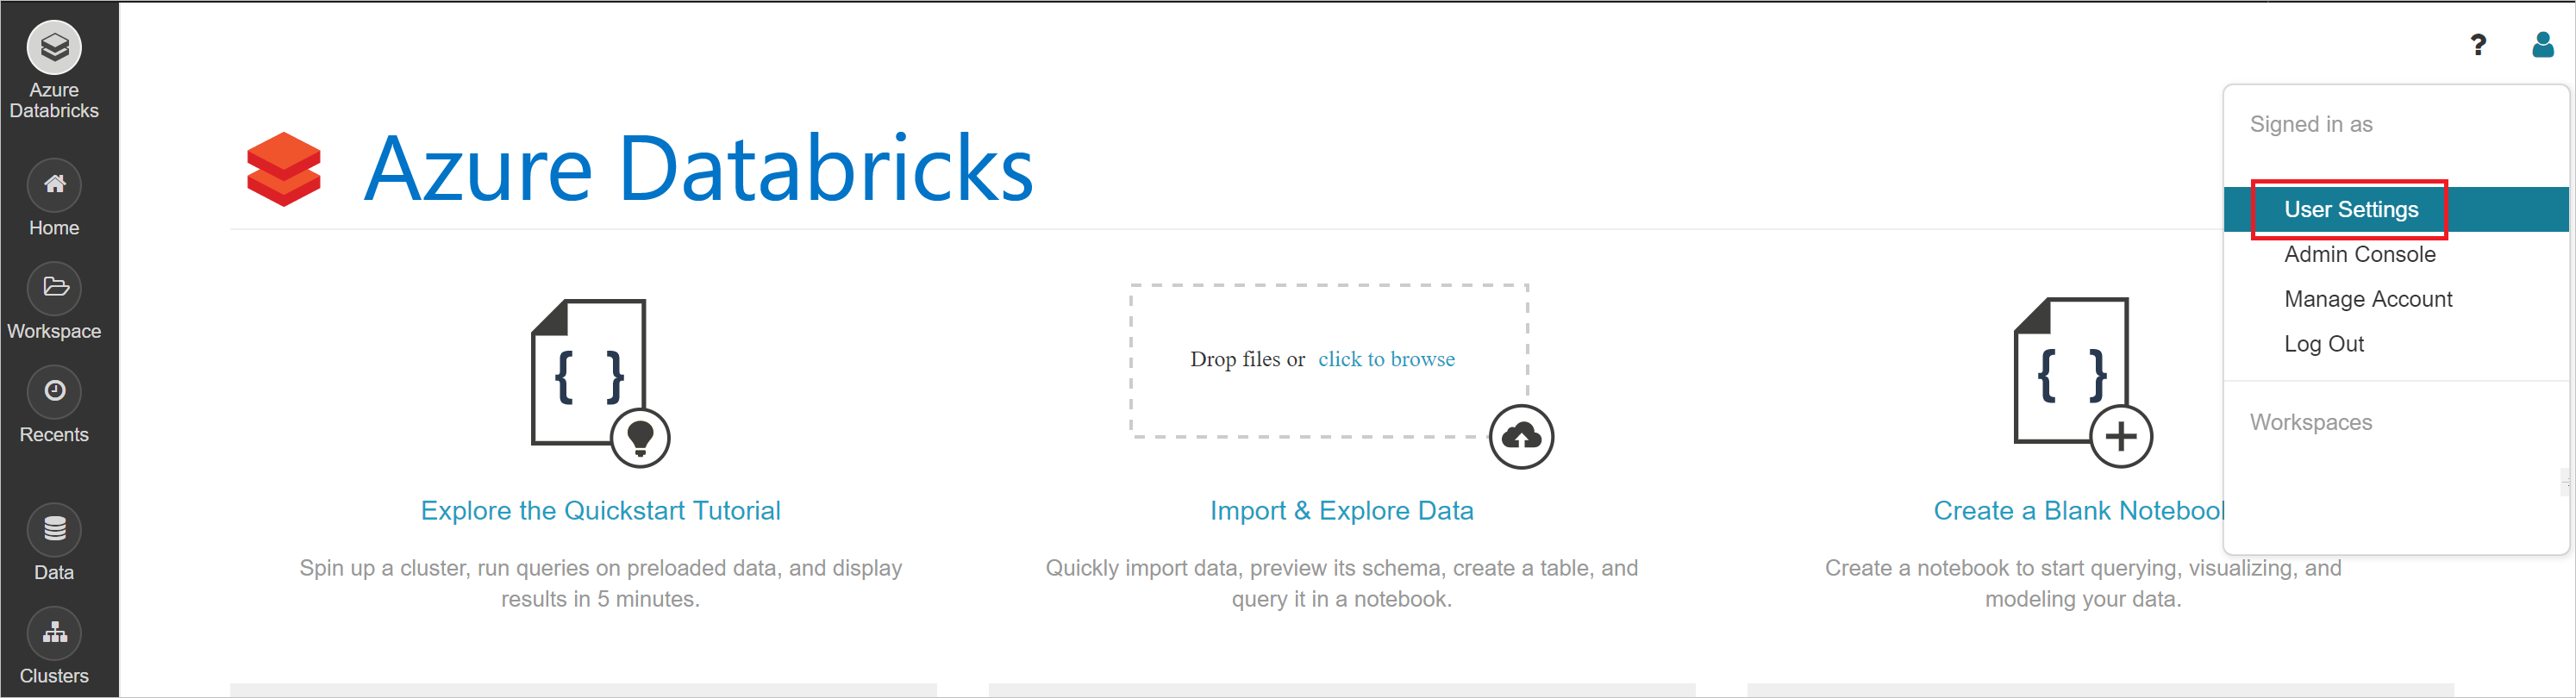 User settings in Azure Databricks workspace